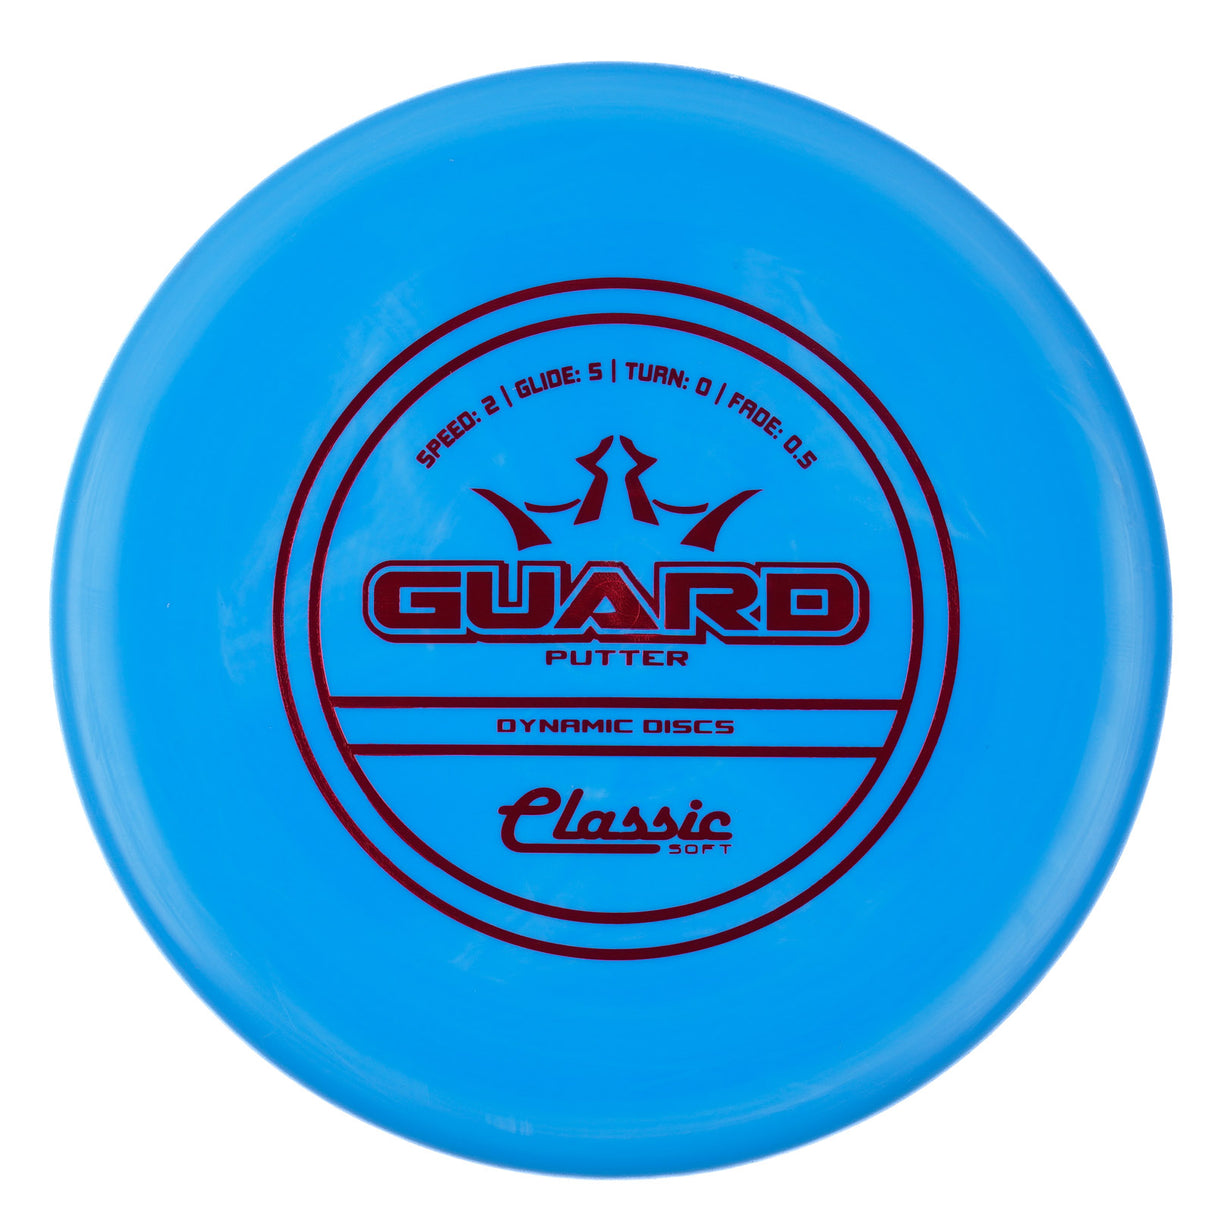 Dynamic Discs Guard - Classic Soft 173g | Style 0001